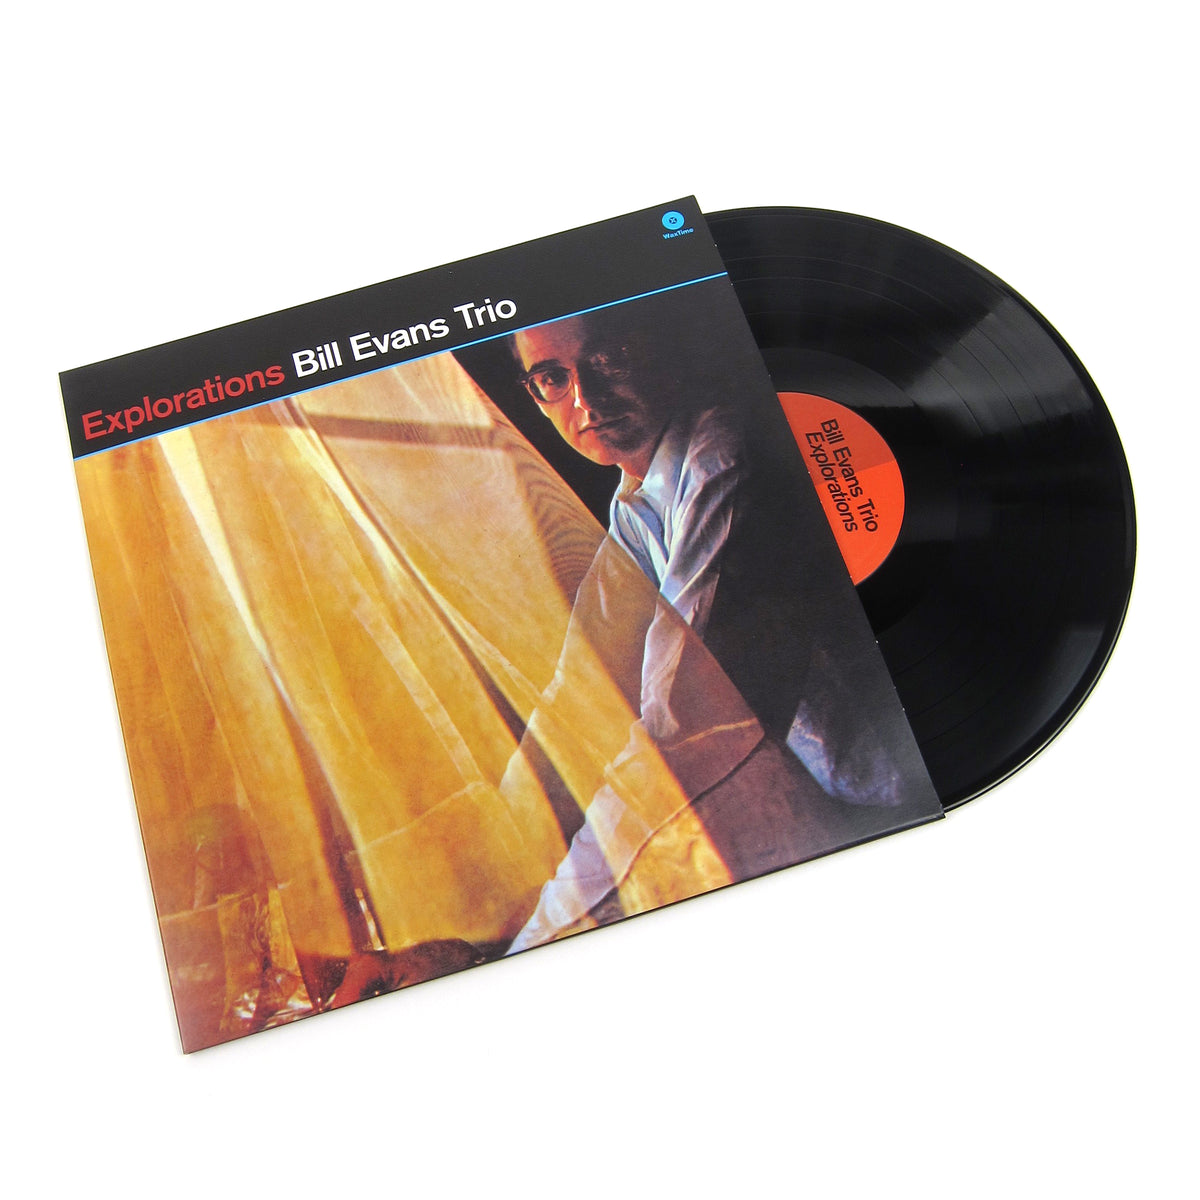 Bill Evans Trio: Explorations (180g) Vinyl LP